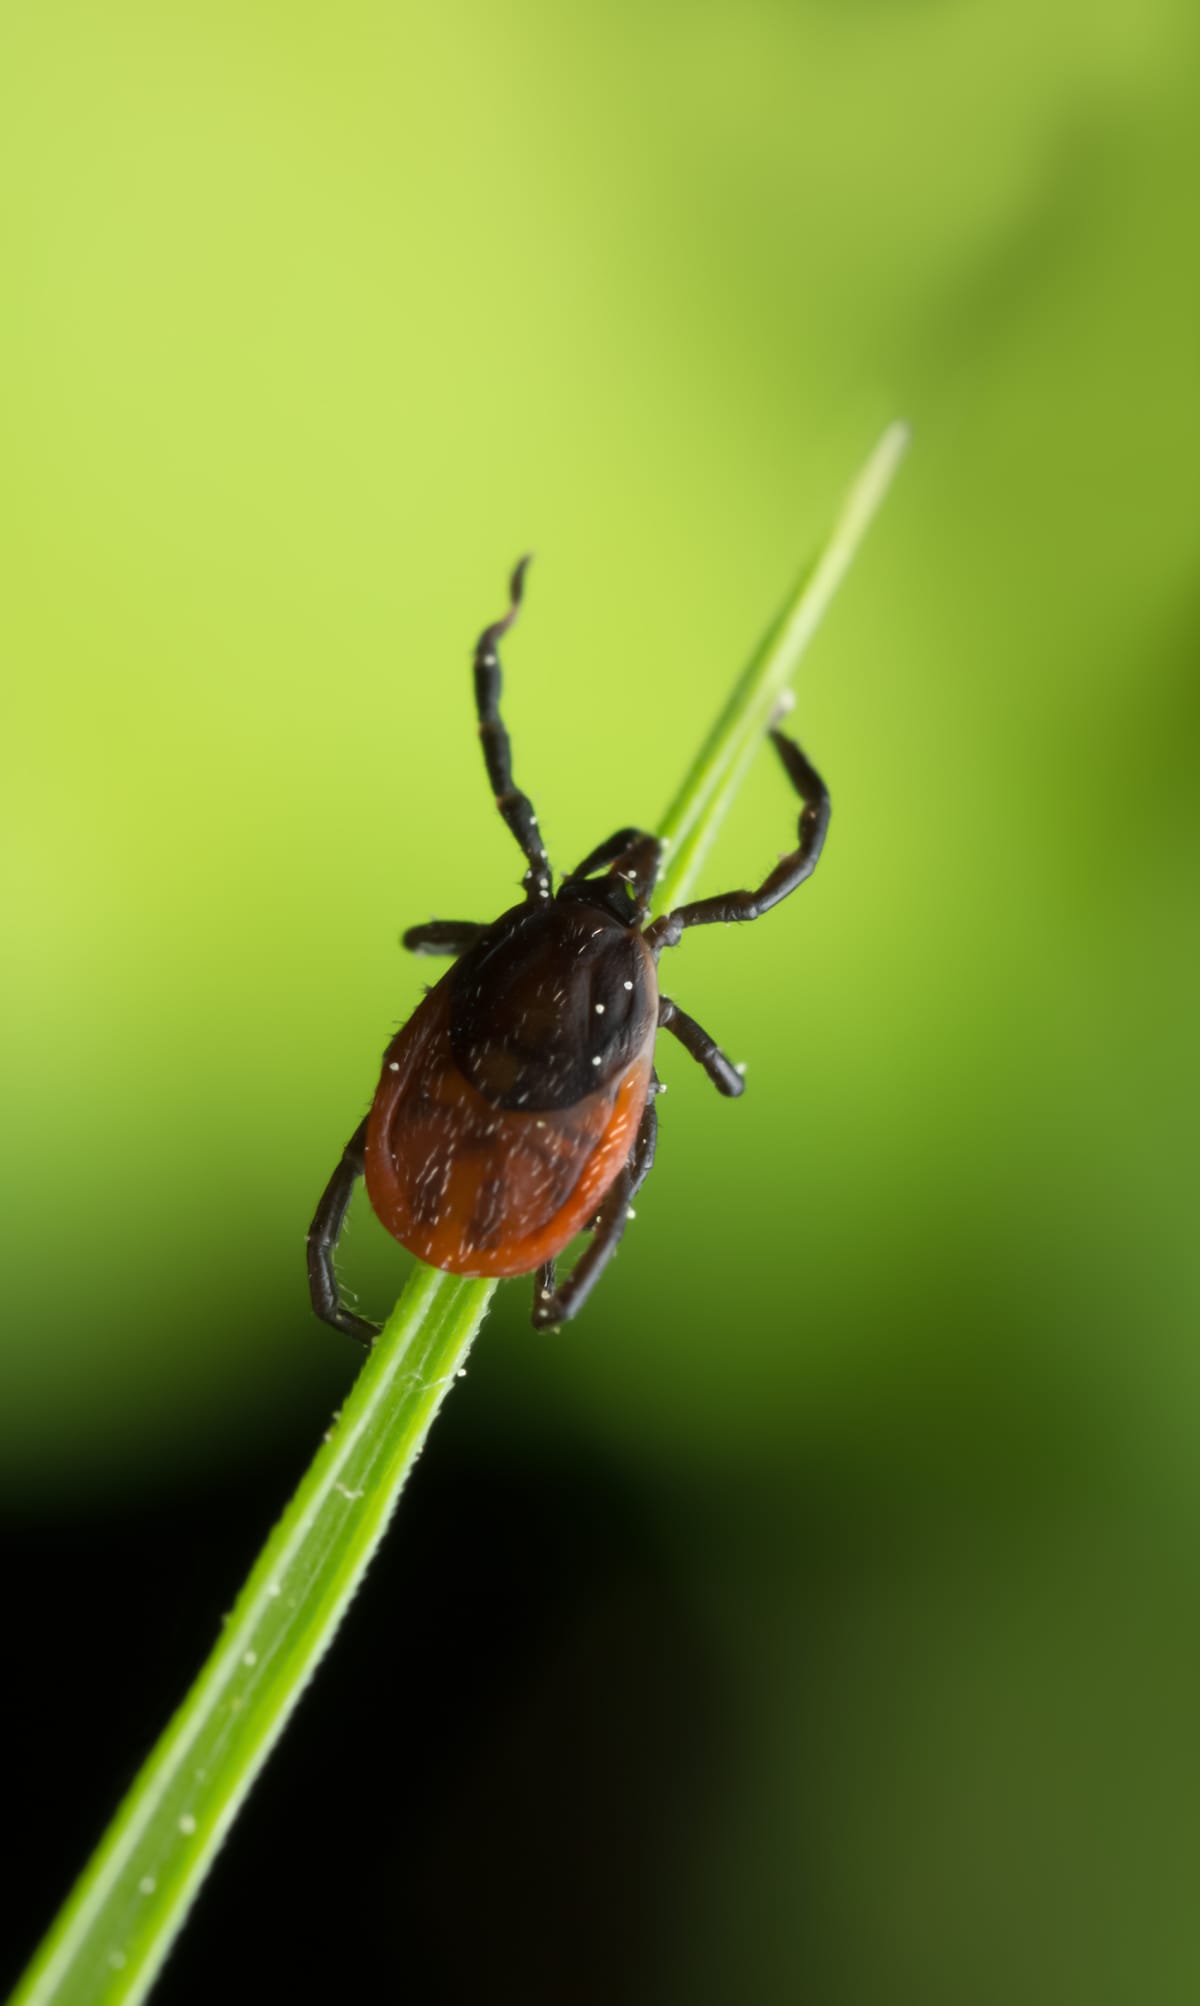 Tick resting on a grassblade